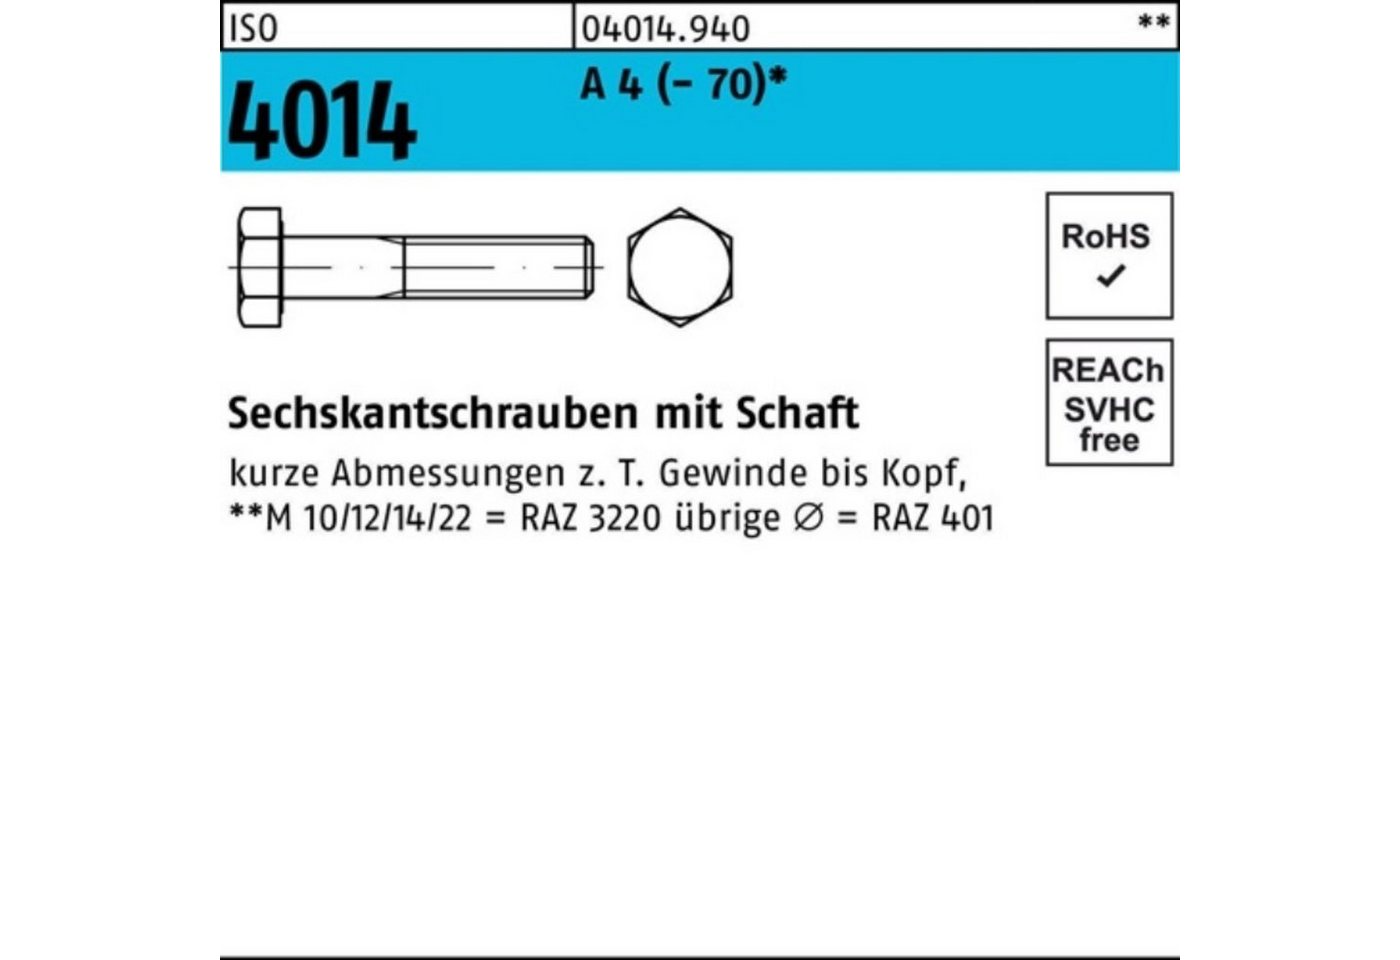 Bufab Sechskantschraube 100er Pack Sechskantschraube ISO 4014 Schaft M22x 140 A 4 (70) 10 St von Bufab